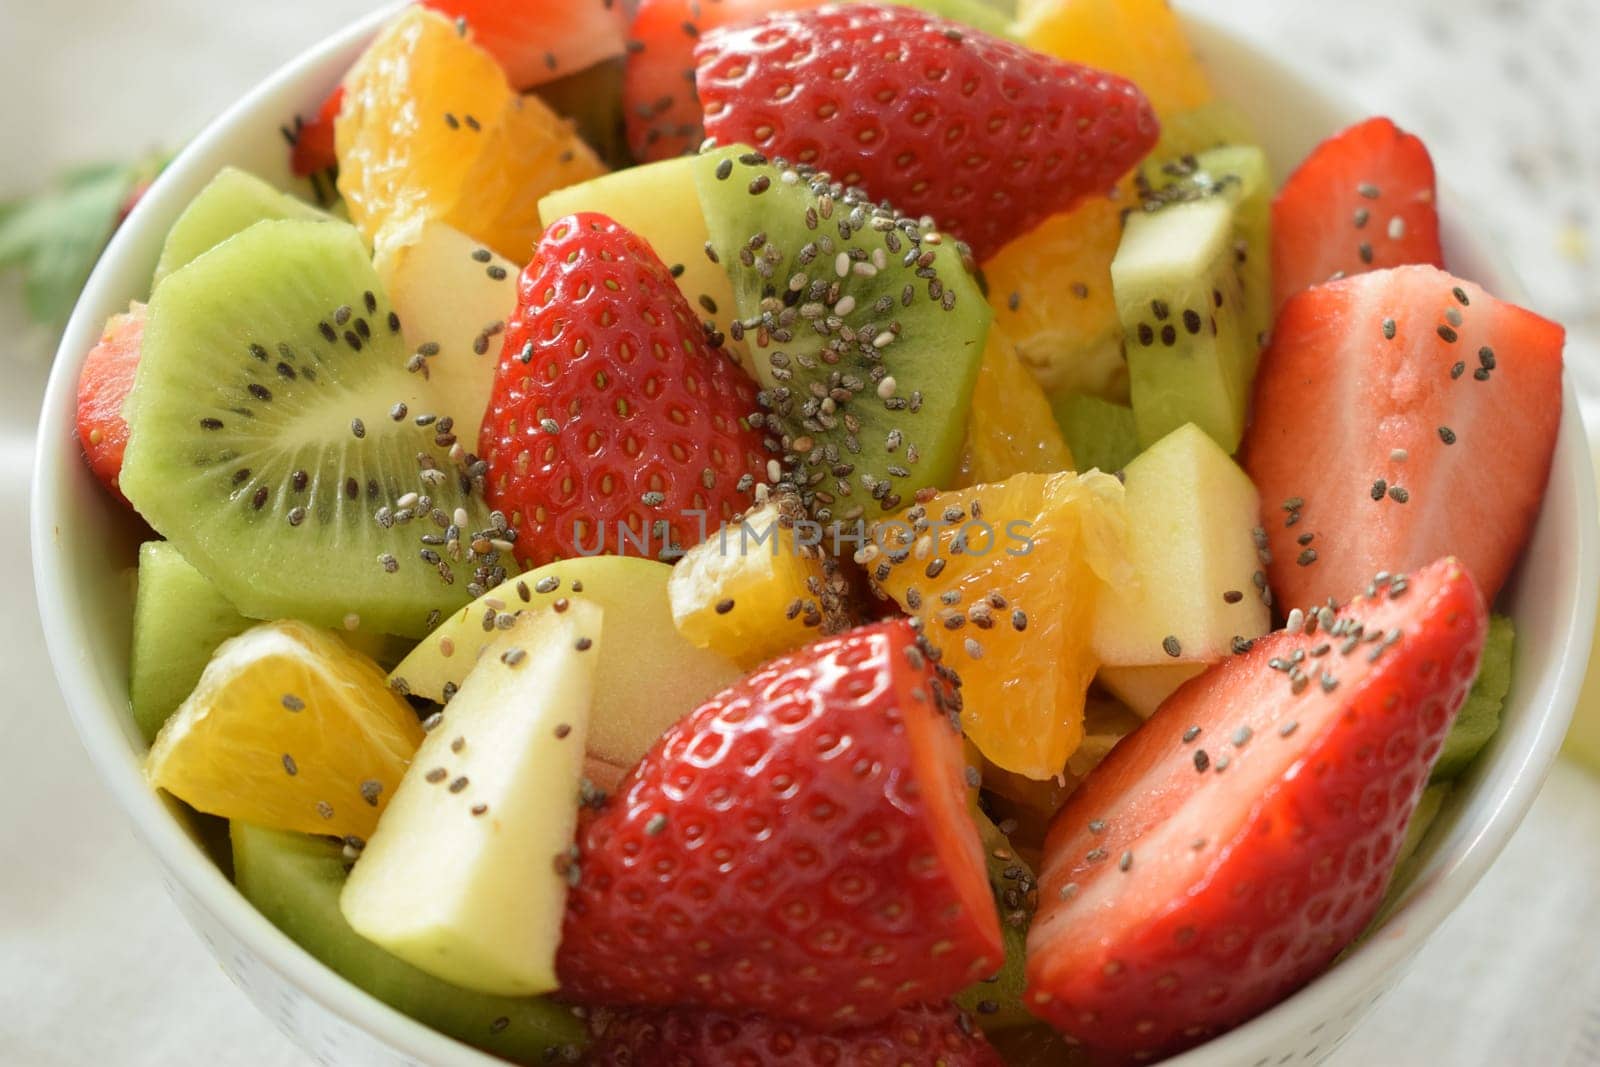 Bowl of fresh fruit salad, kiwi, apples, oranges.